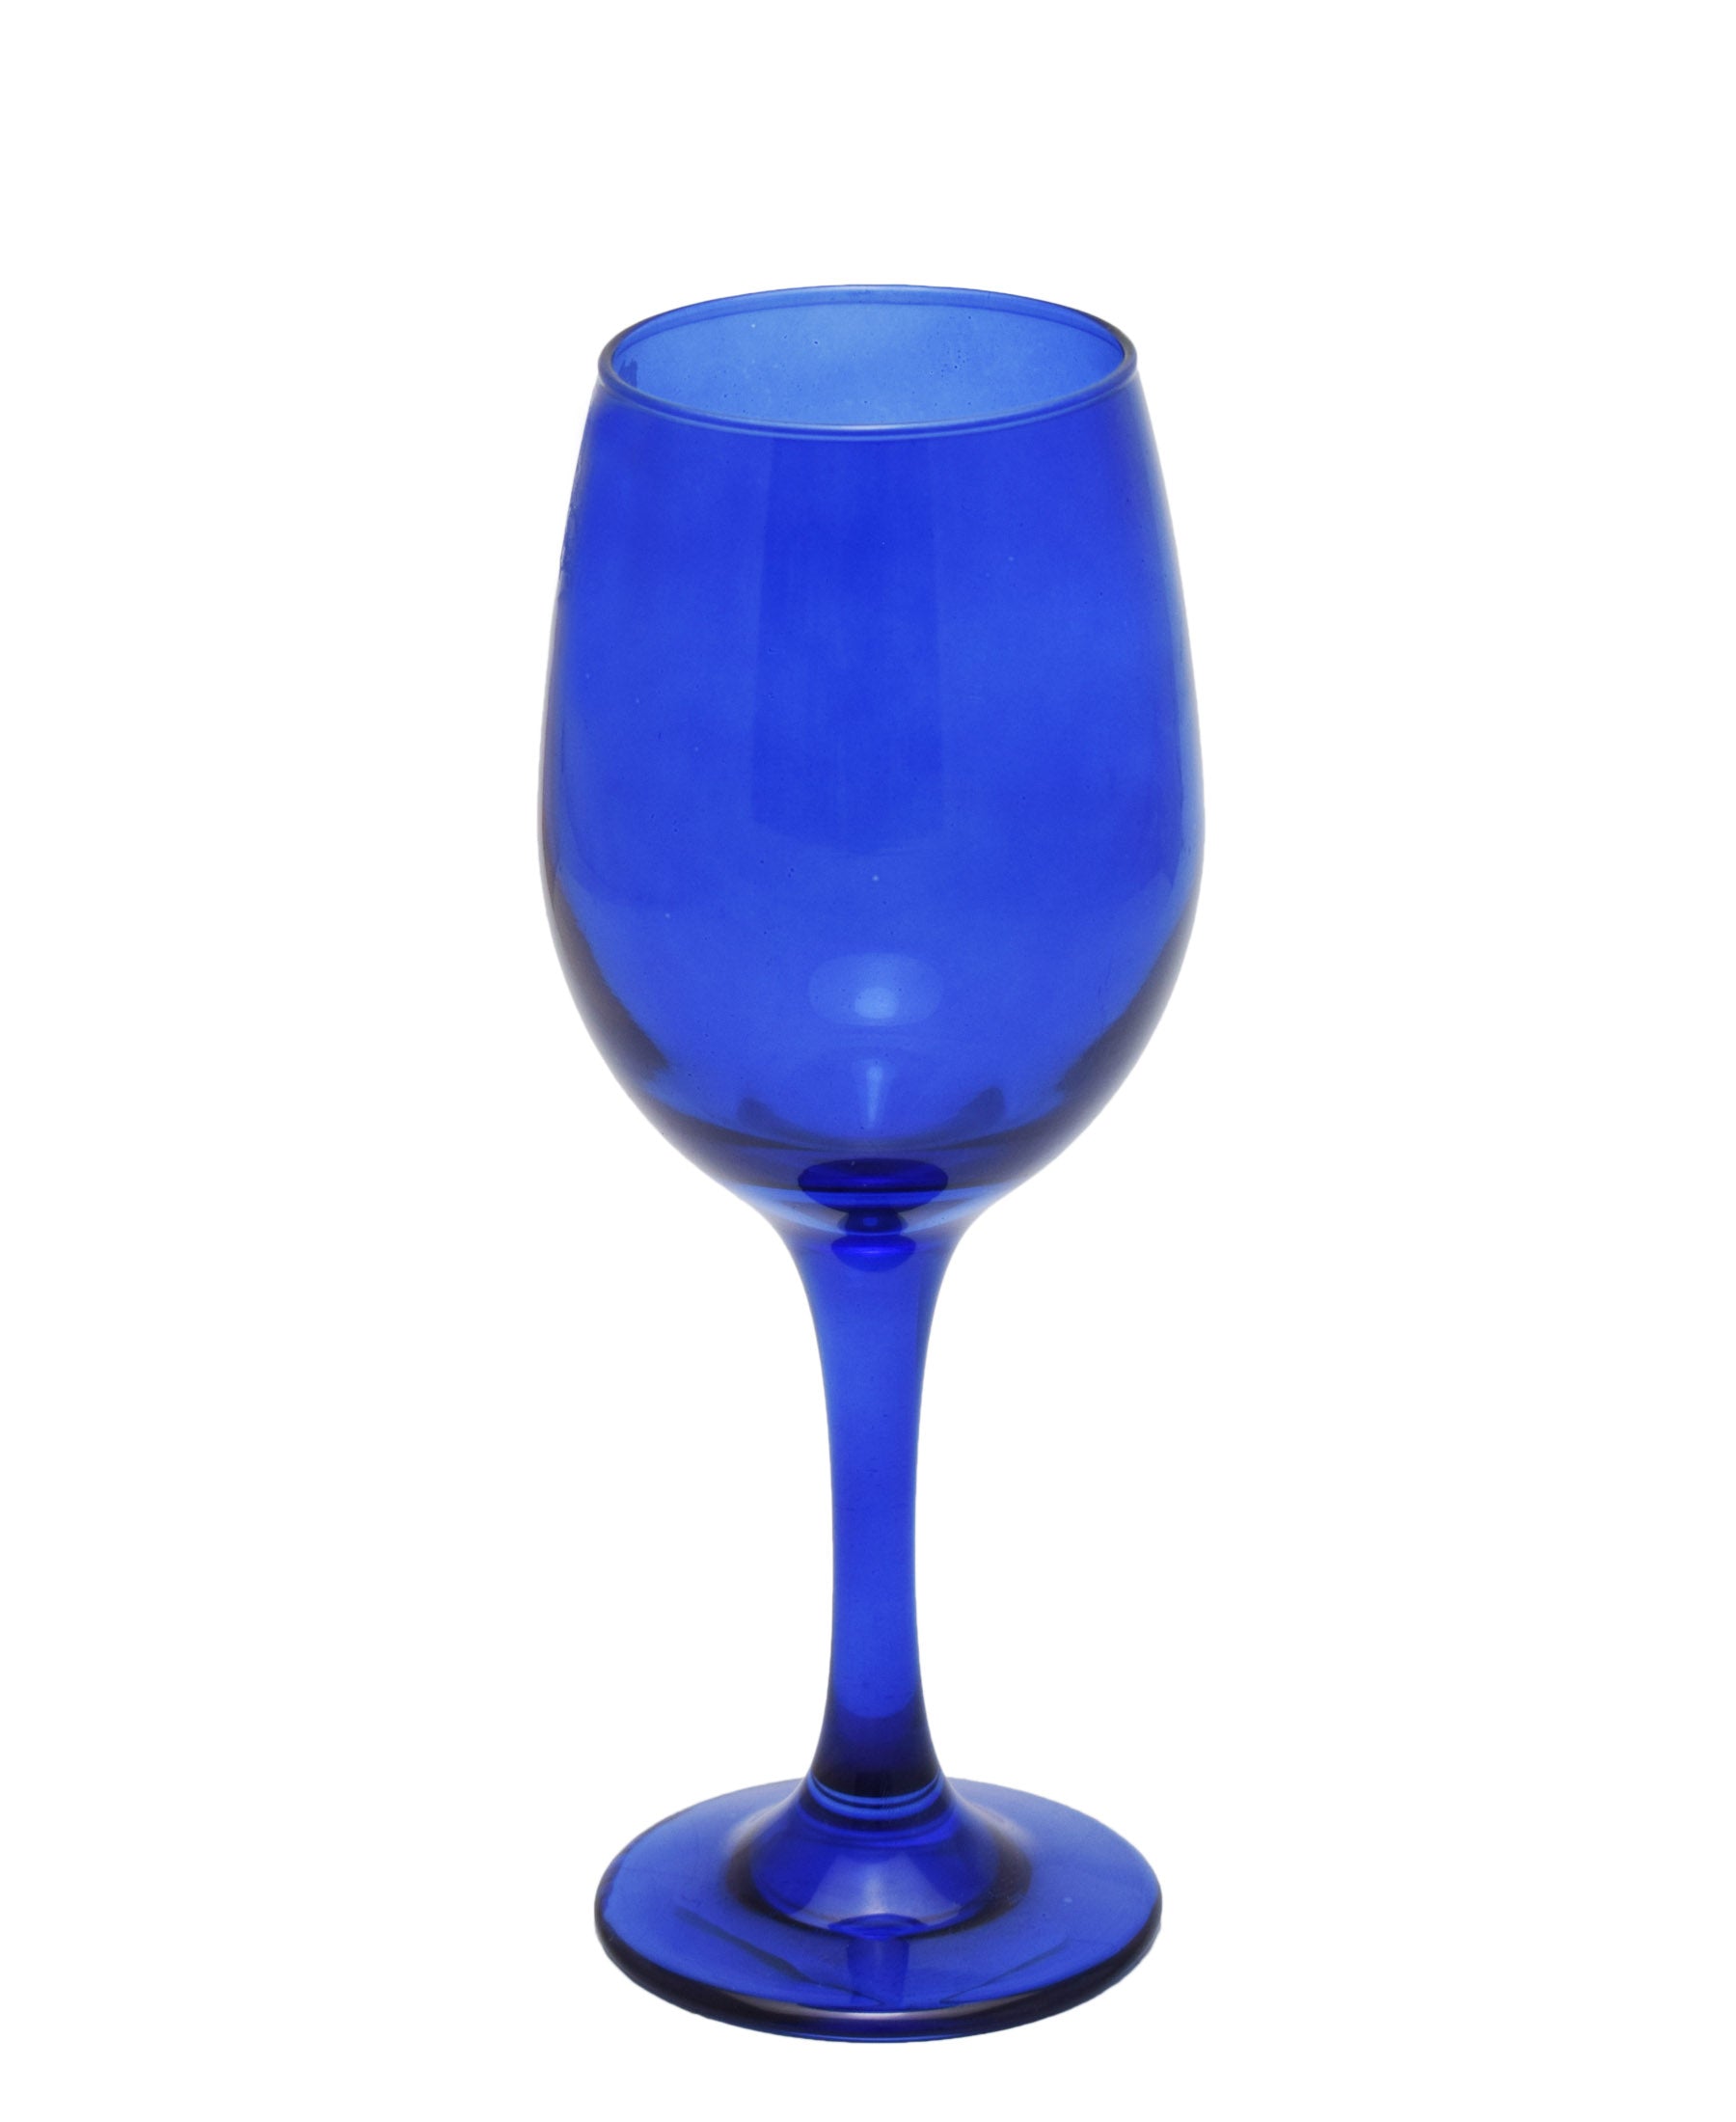 Unique Designs Simplicity Stem Wine Glass - Blue